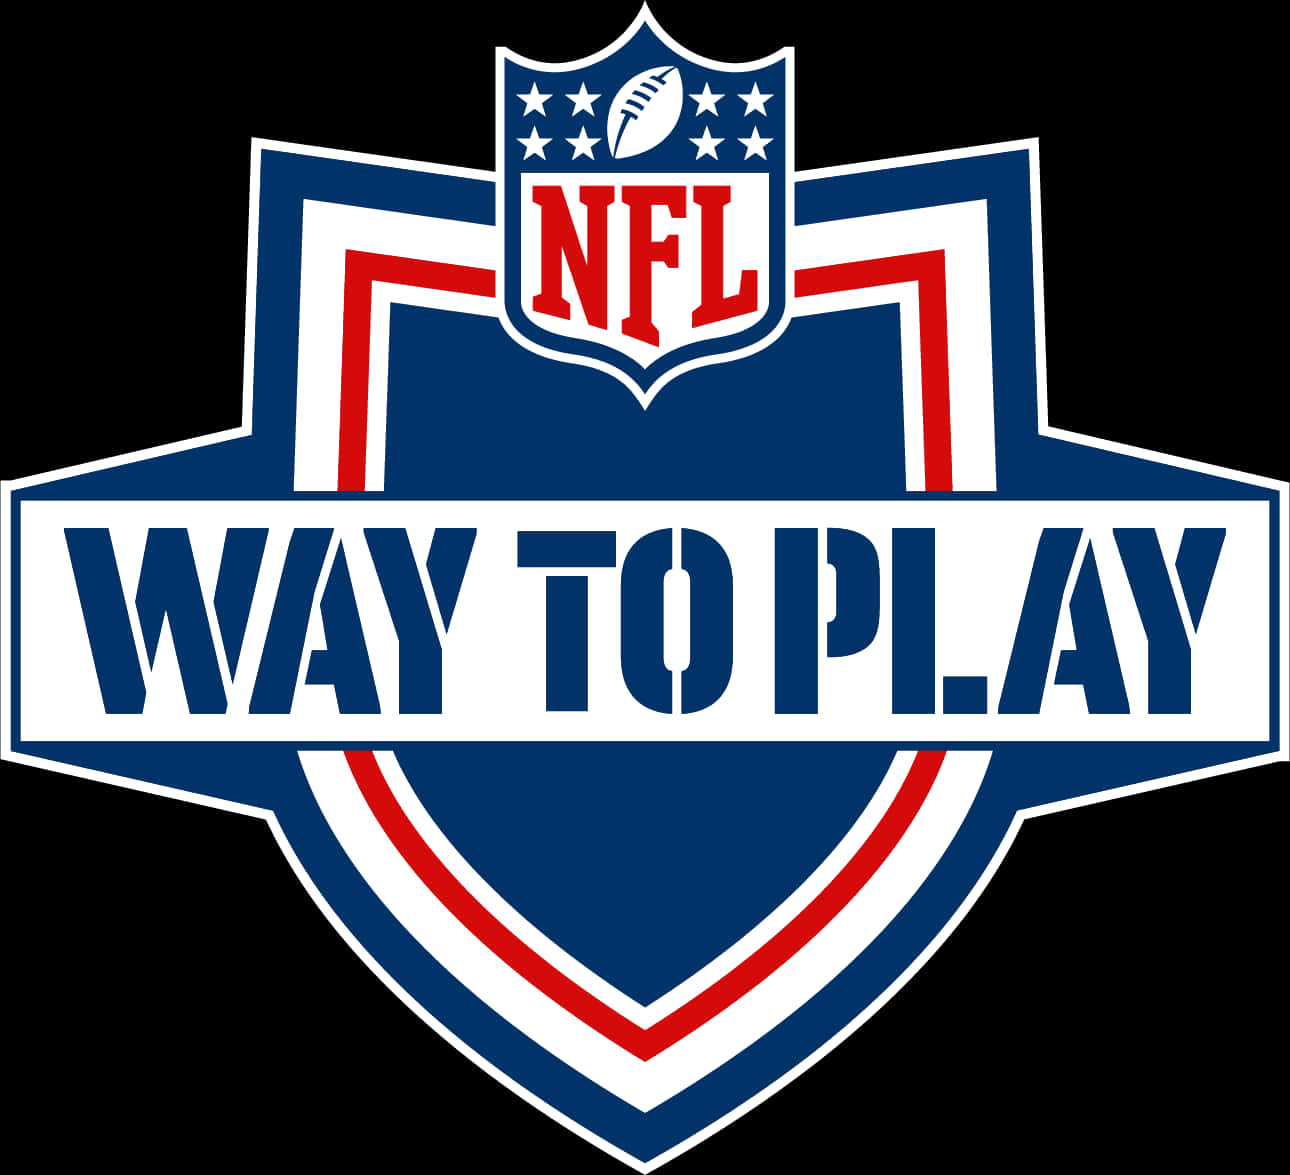 N F L Way To Play Logo PNG image